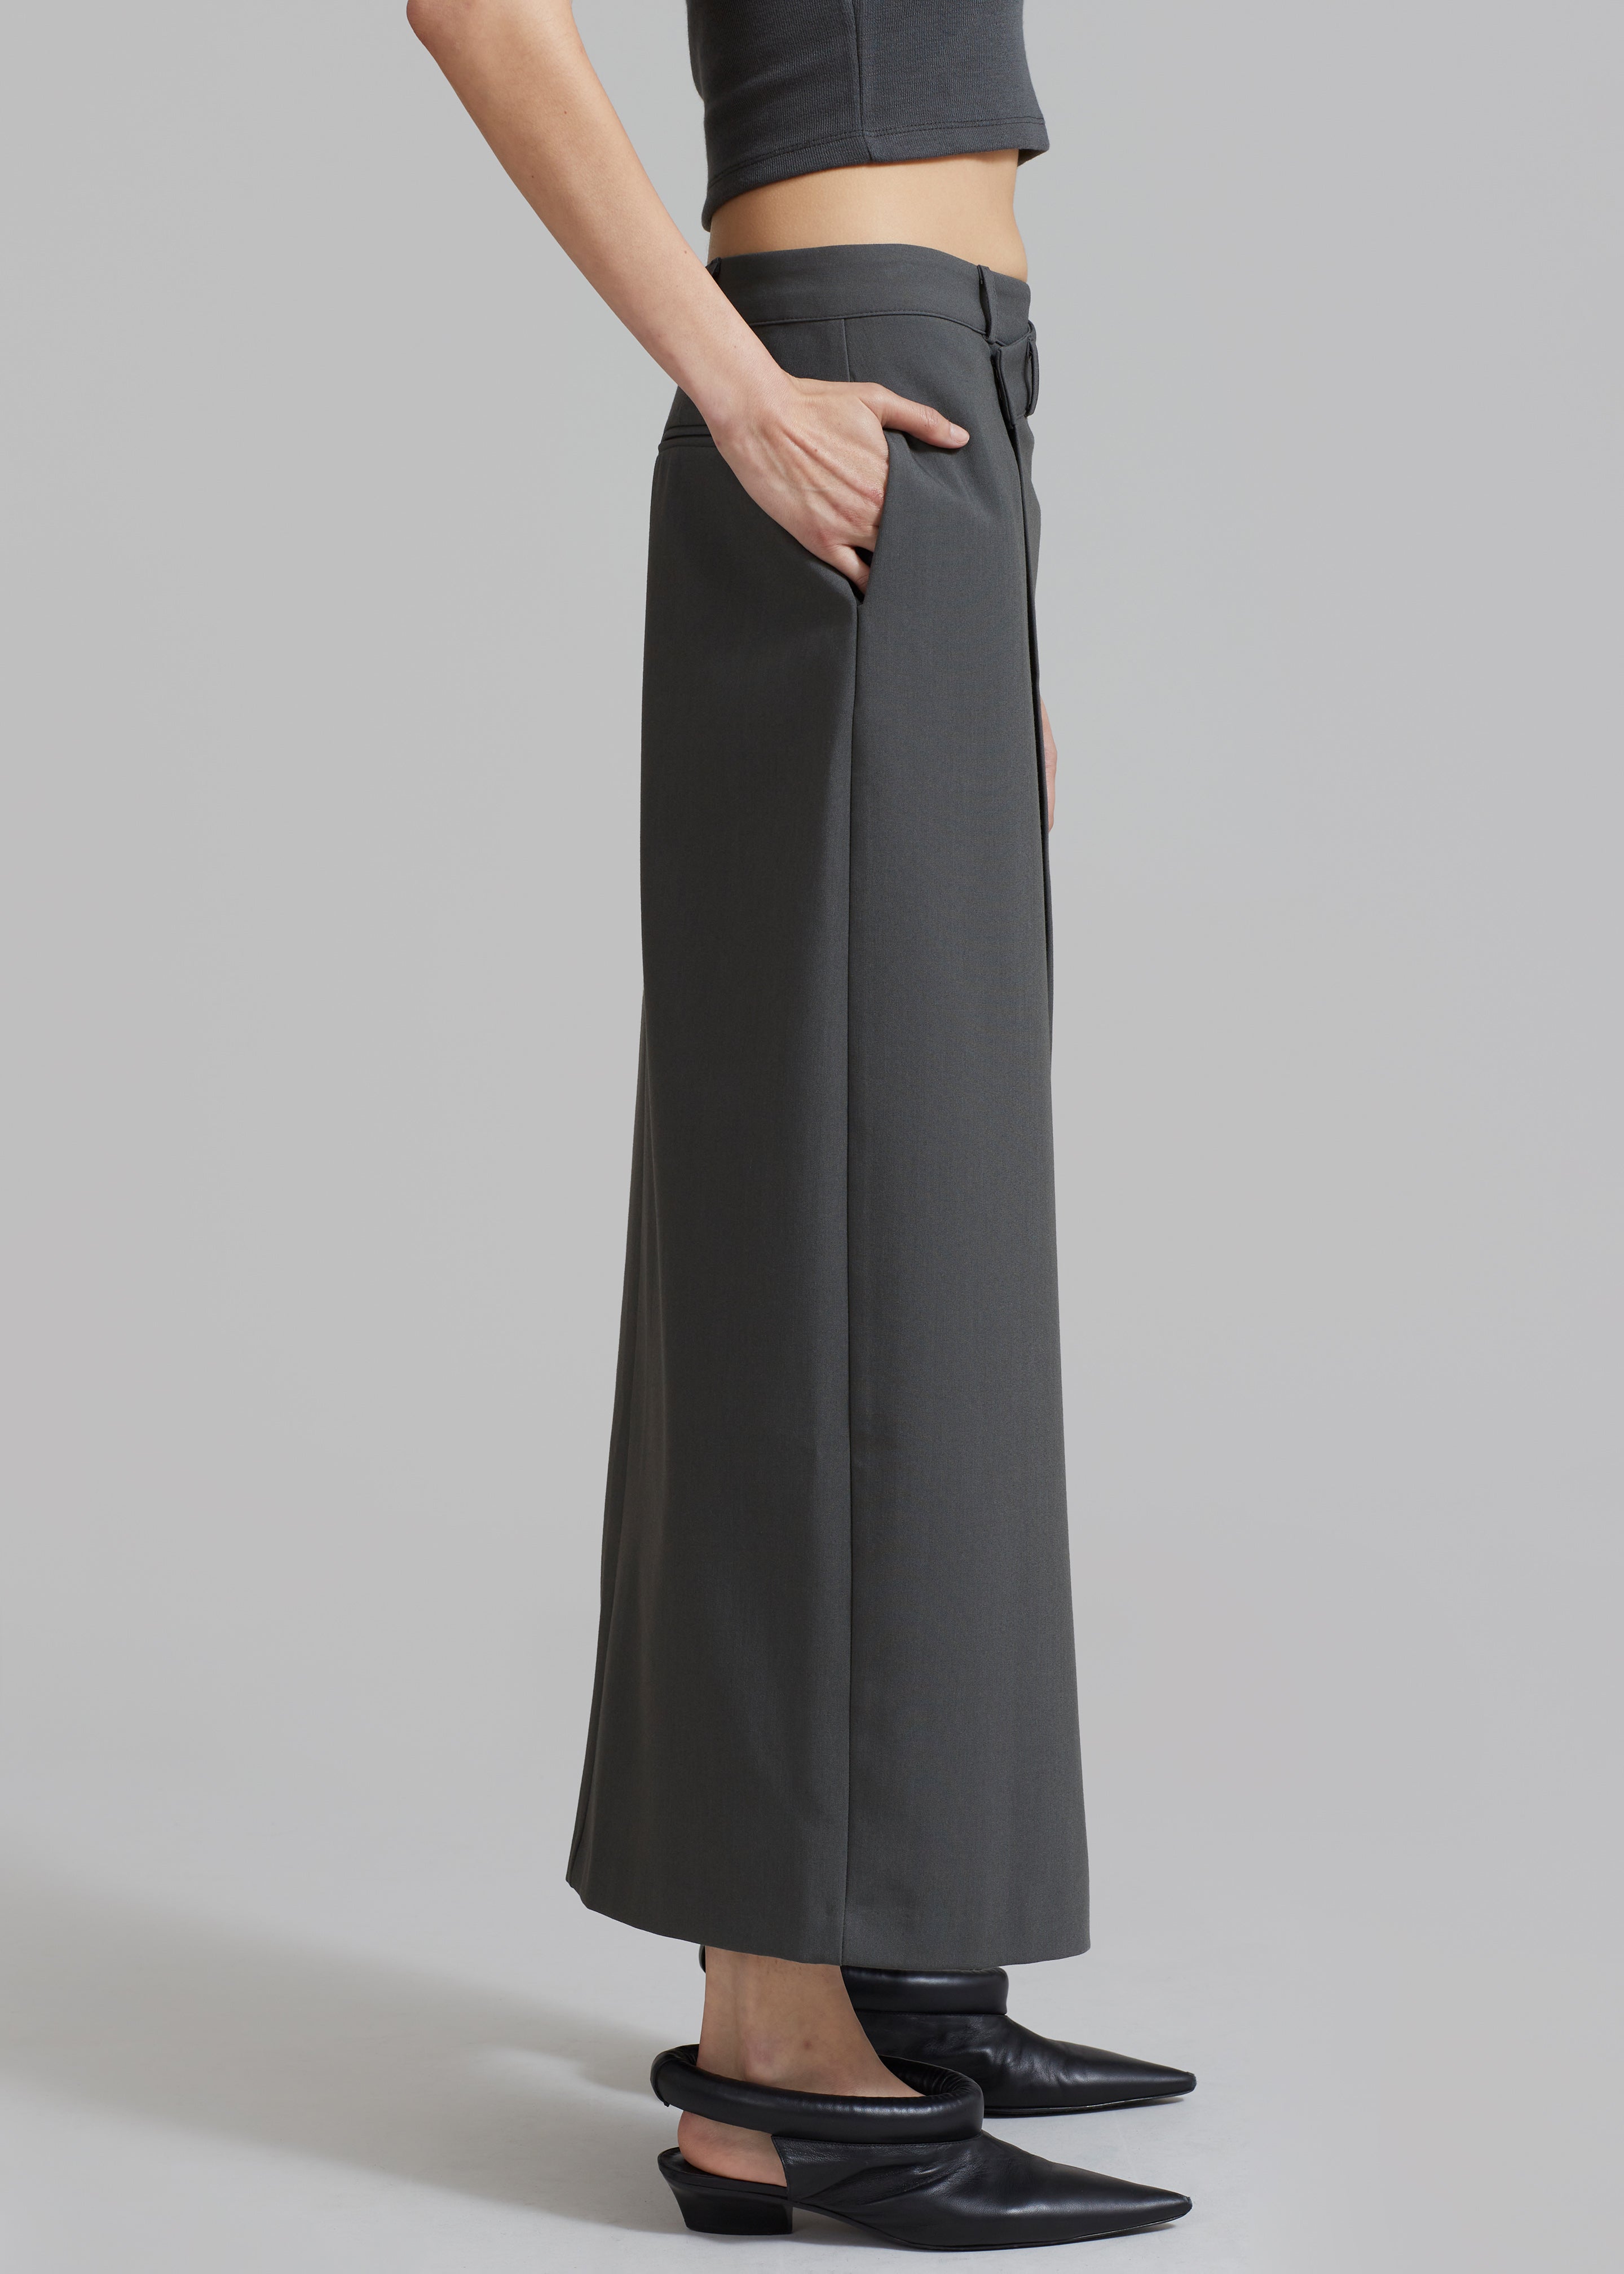 Annabel Asymmetric Midi Skirt - Grey - 7